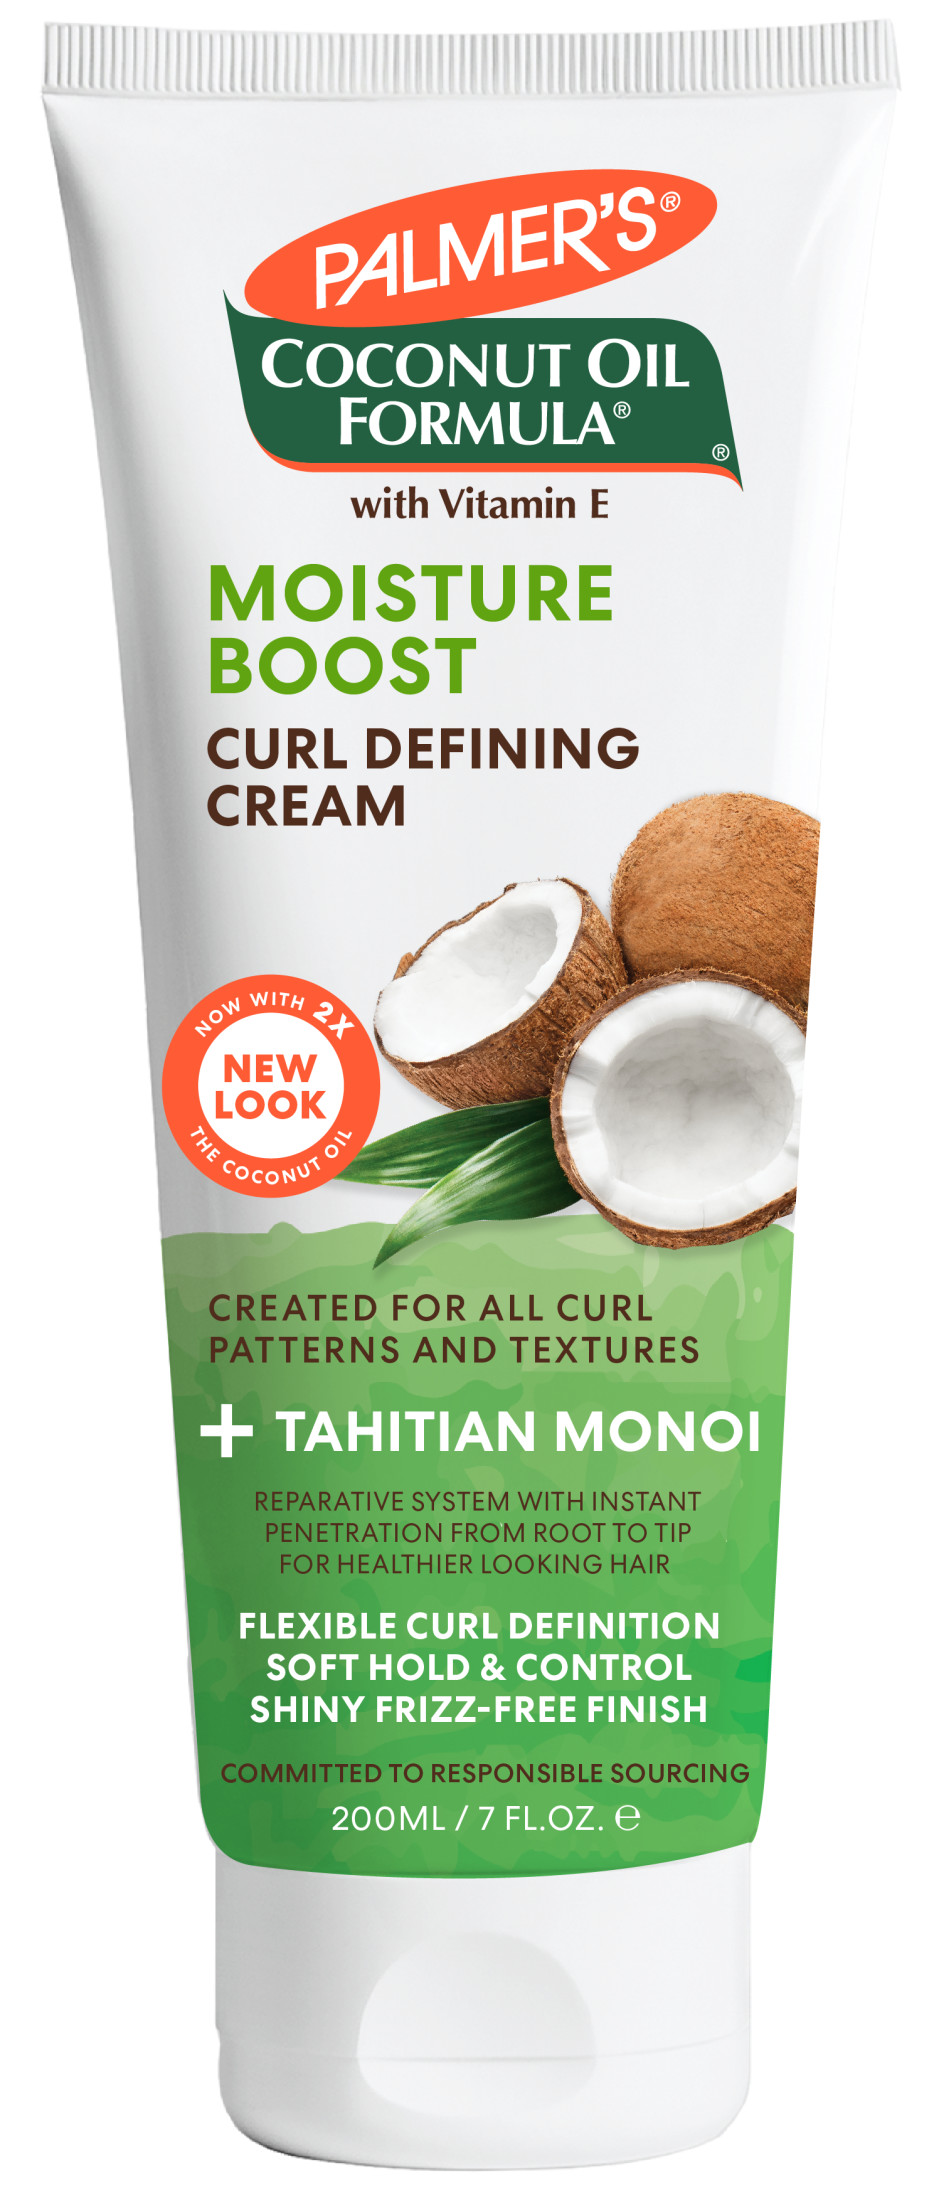 Palmer's Coconut Oil Formula Moisture Boost Curl Defining Cream, 7 fl. oz. - image 1 of 13